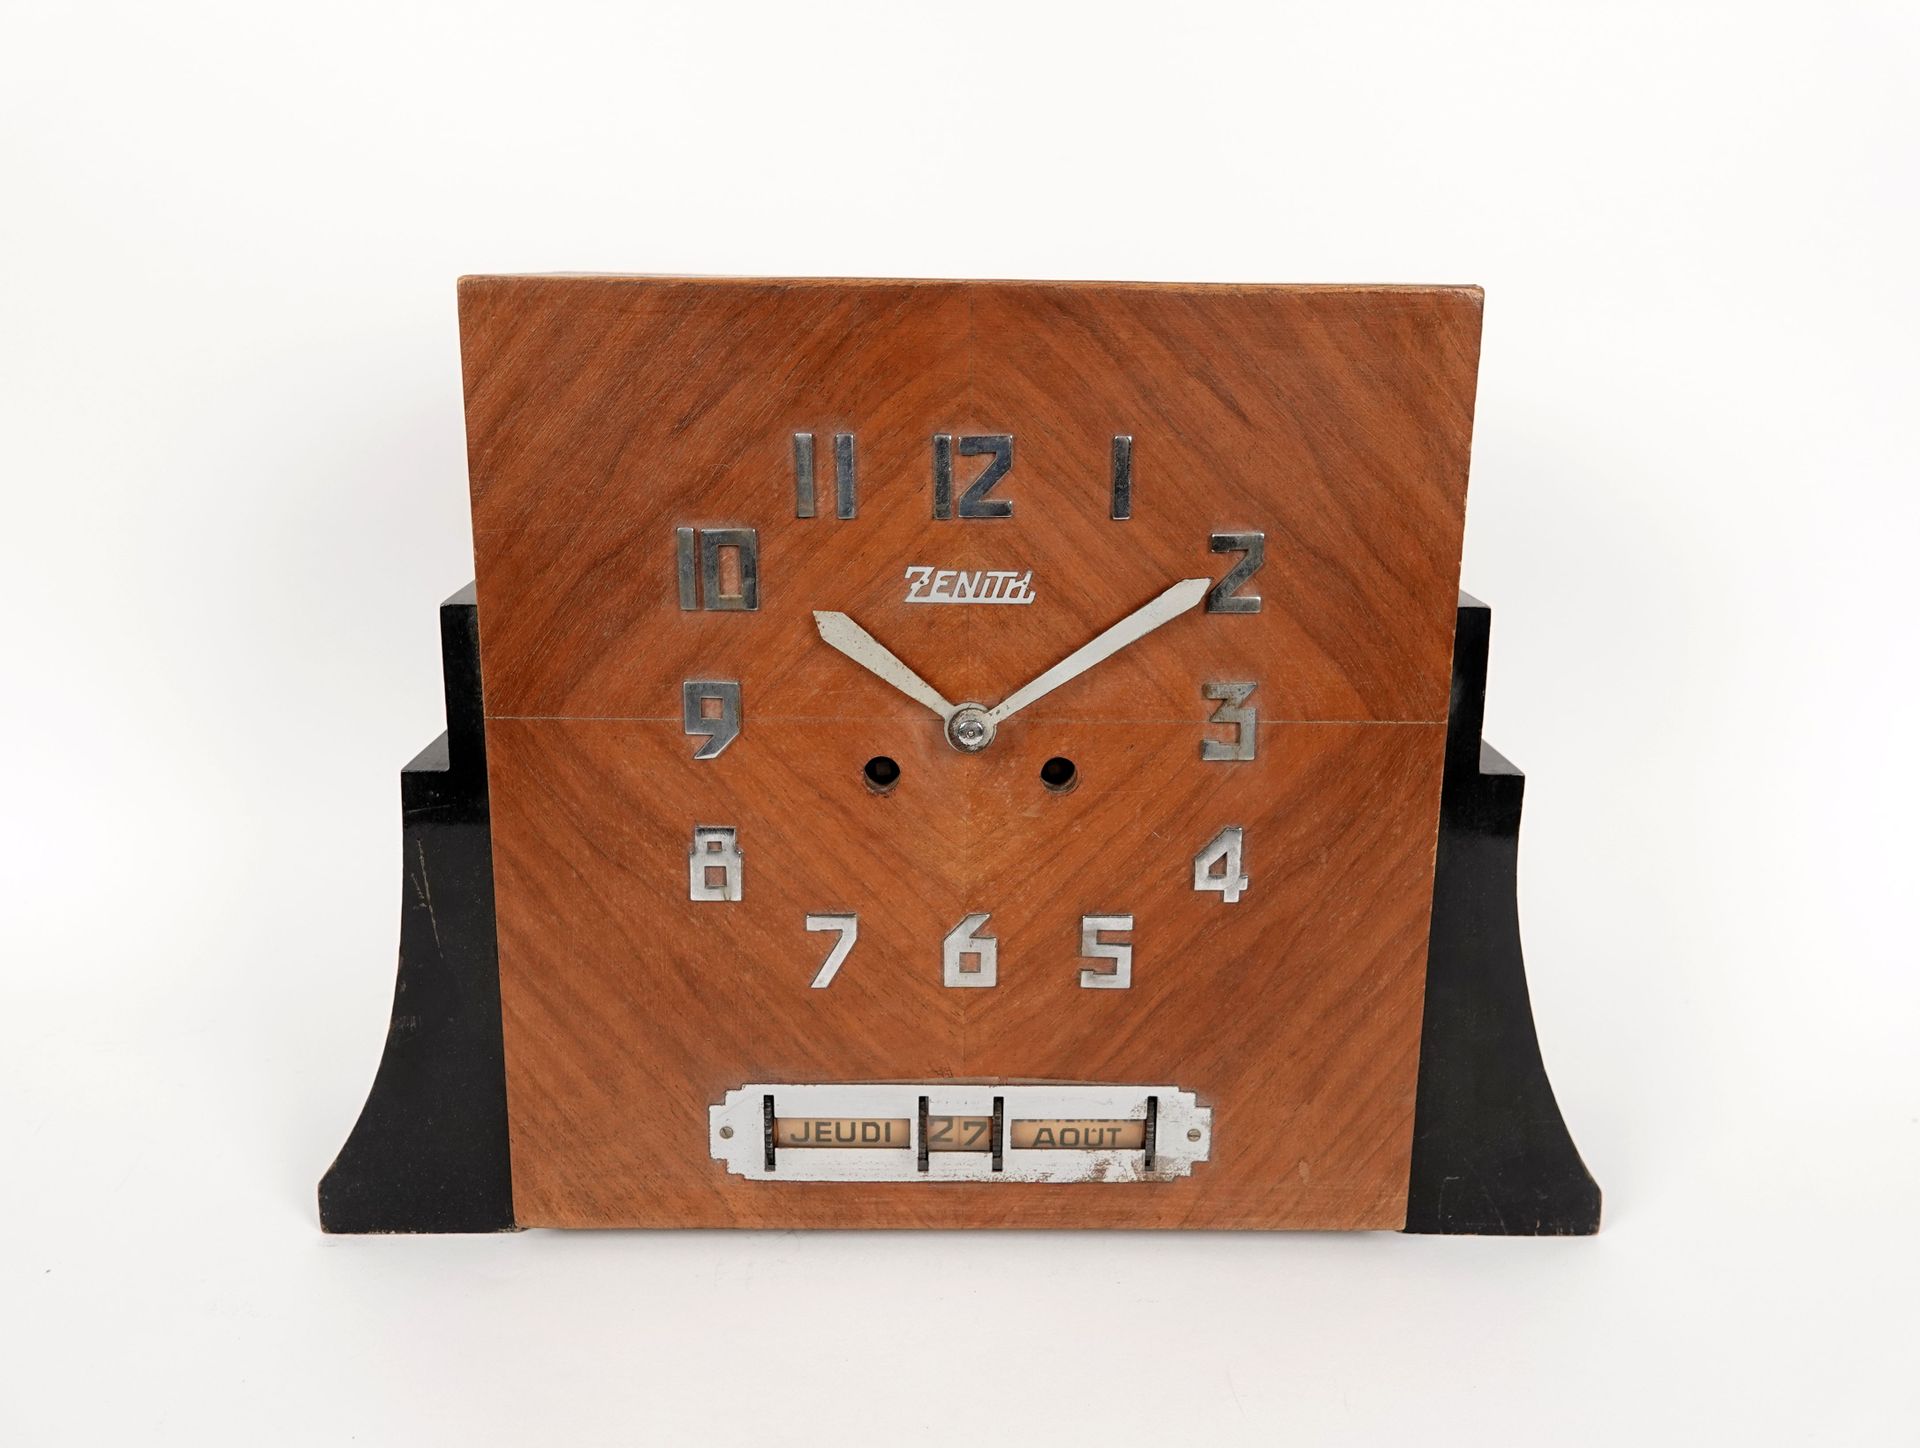 Null Zenith
Reloj de sobremesa o de chimenea de madera, números arábigos aplicad&hellip;